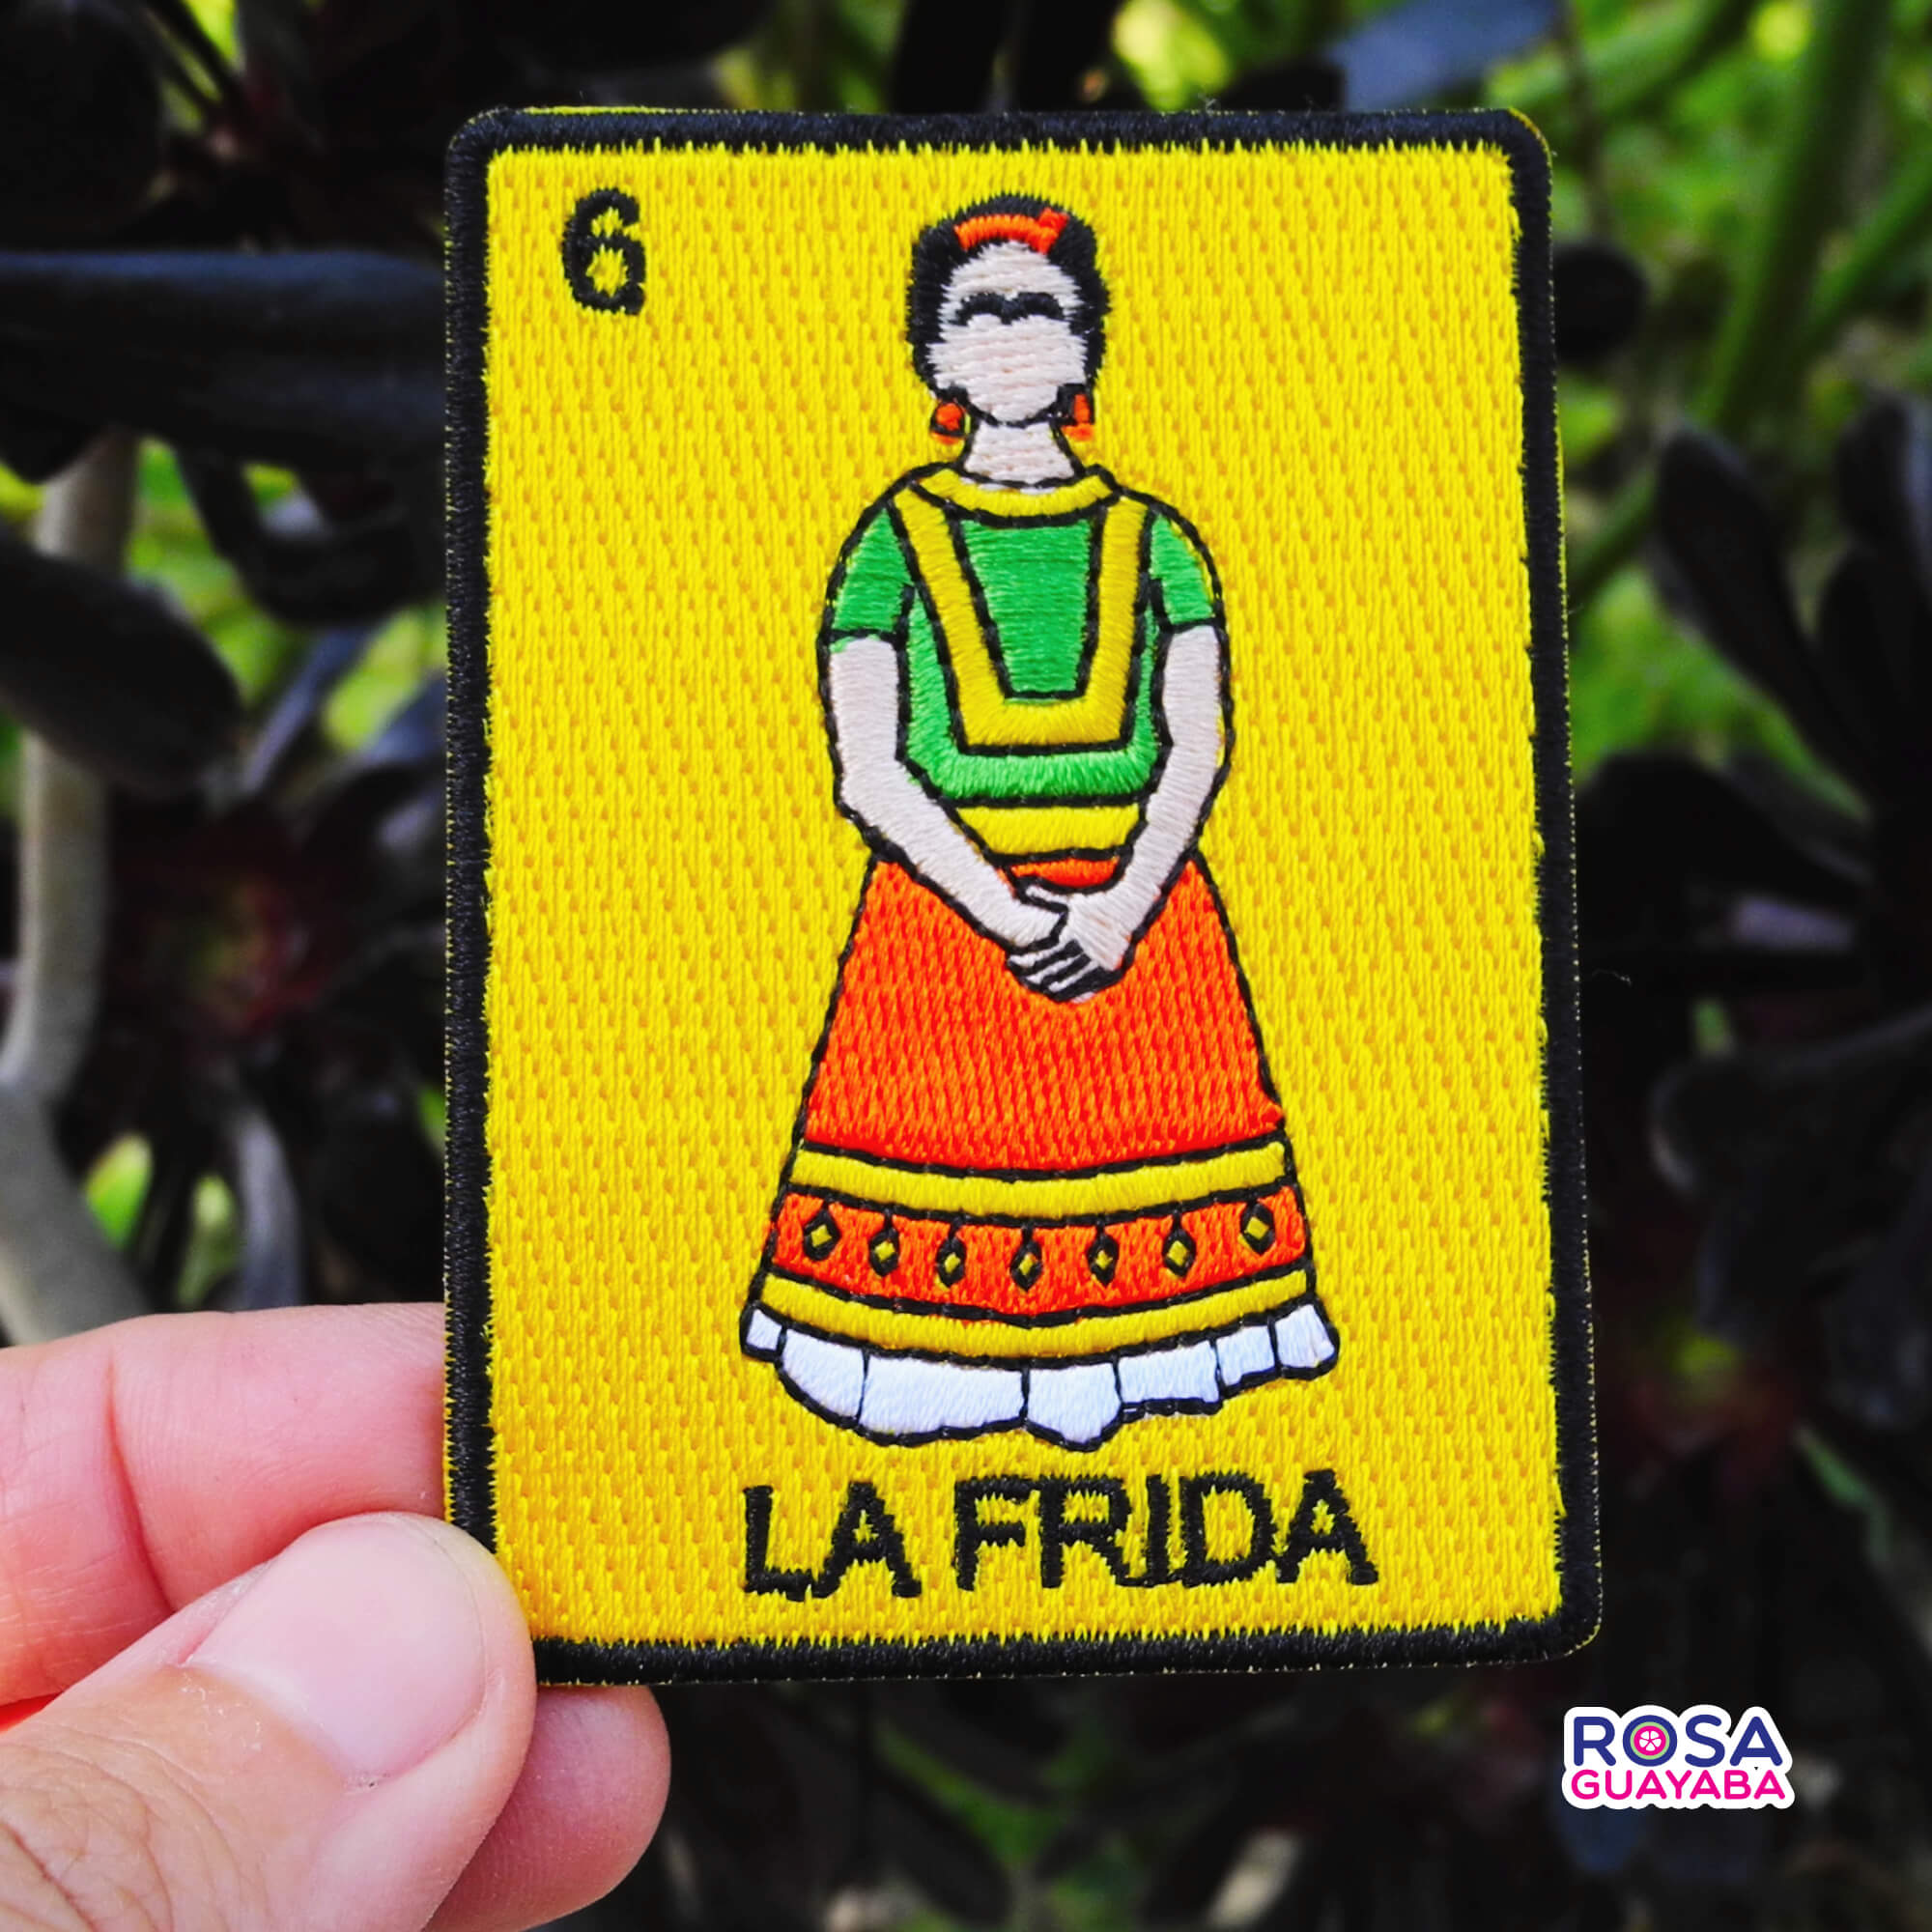 Frida Kahlo iron-on patch “Loteria”